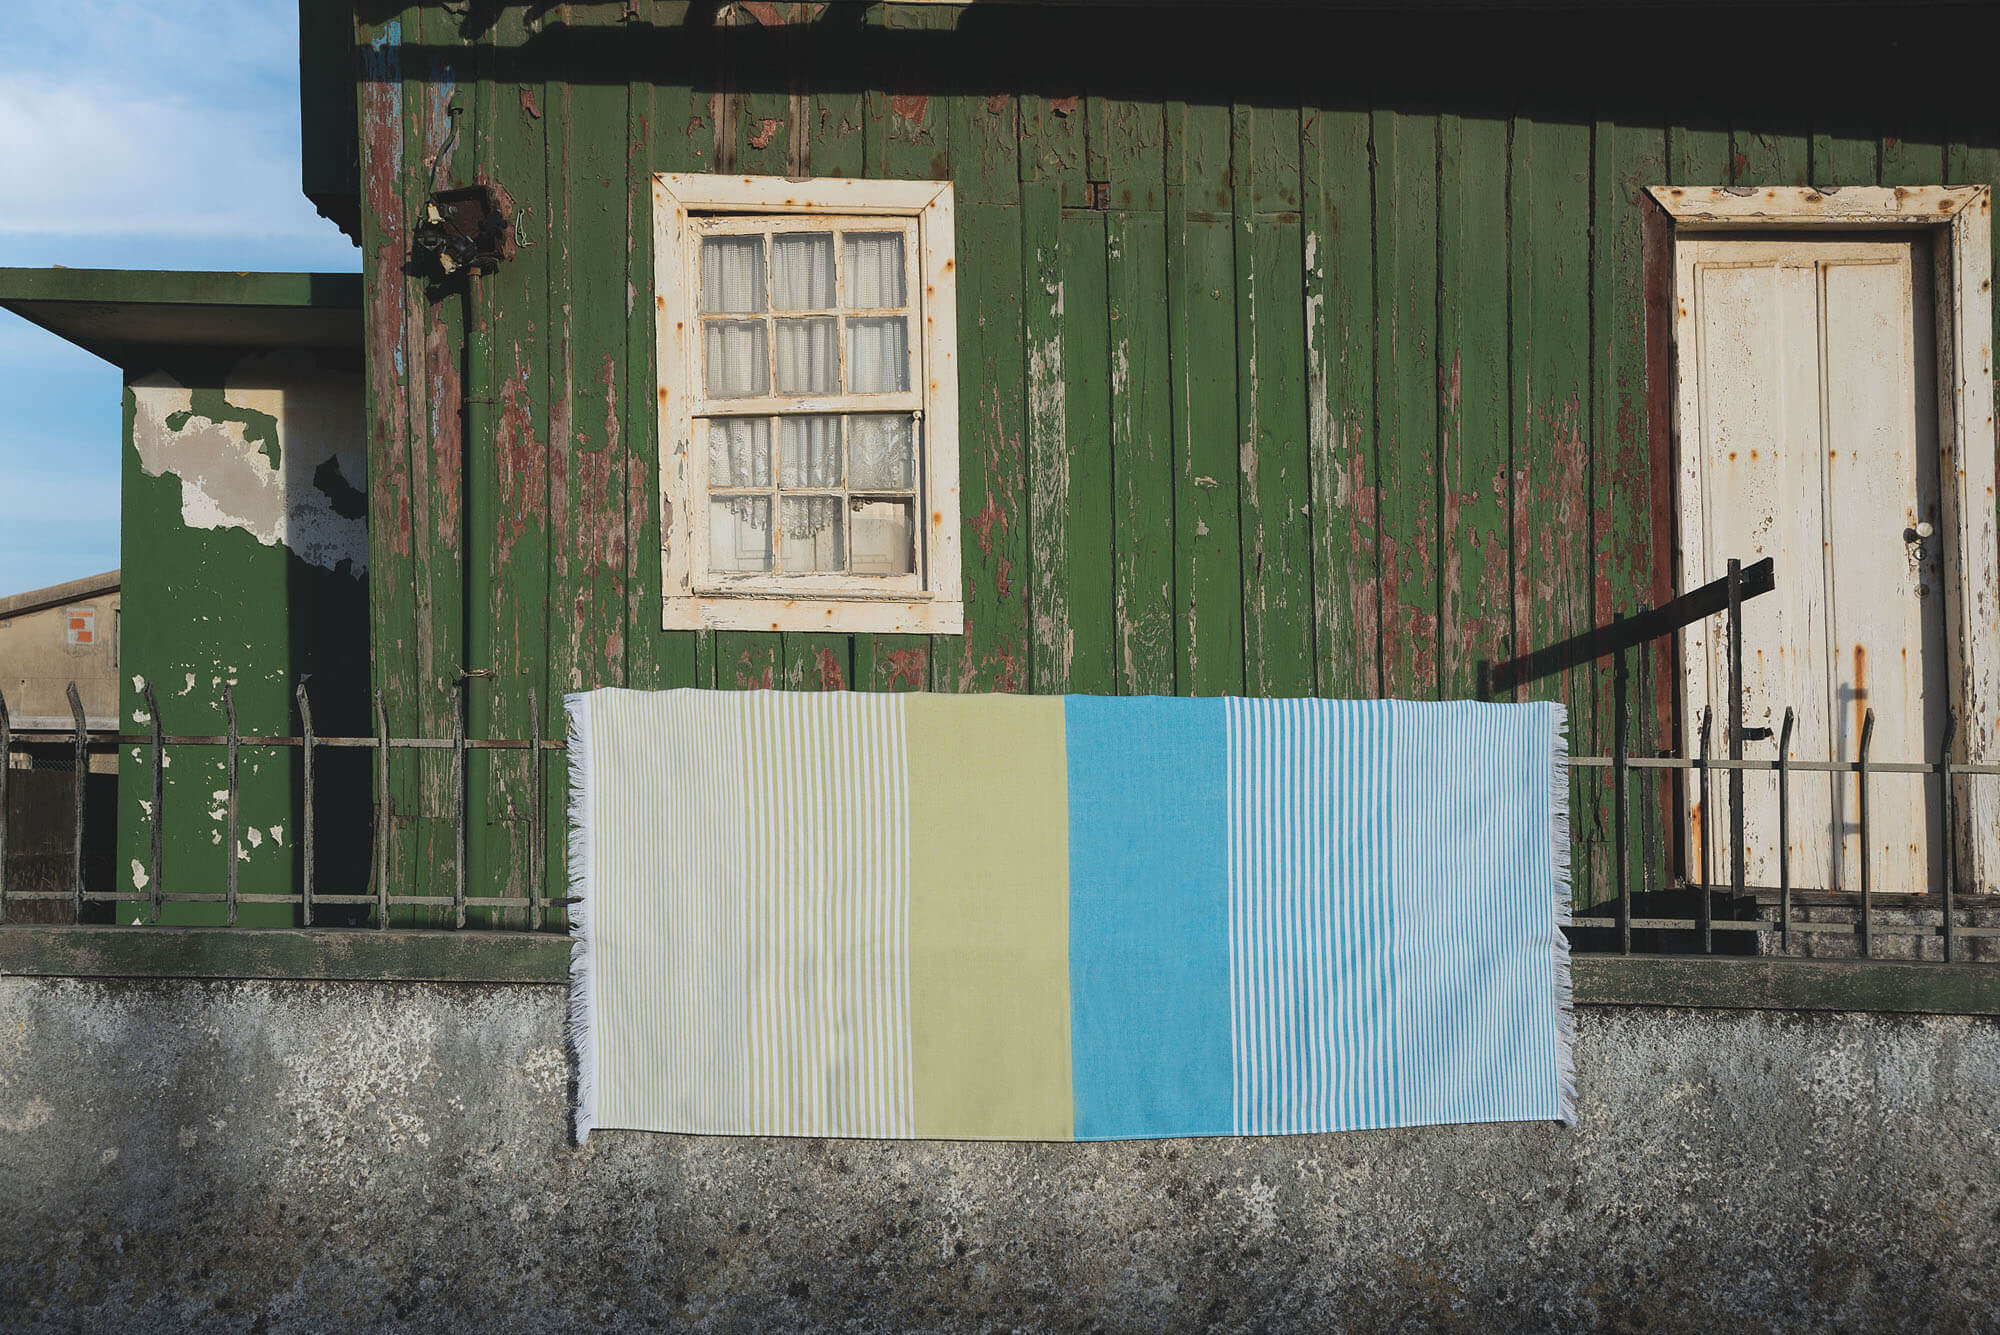 Пляжное полотенце Caribe Sorema ☞ Размер: 90 x 180 см